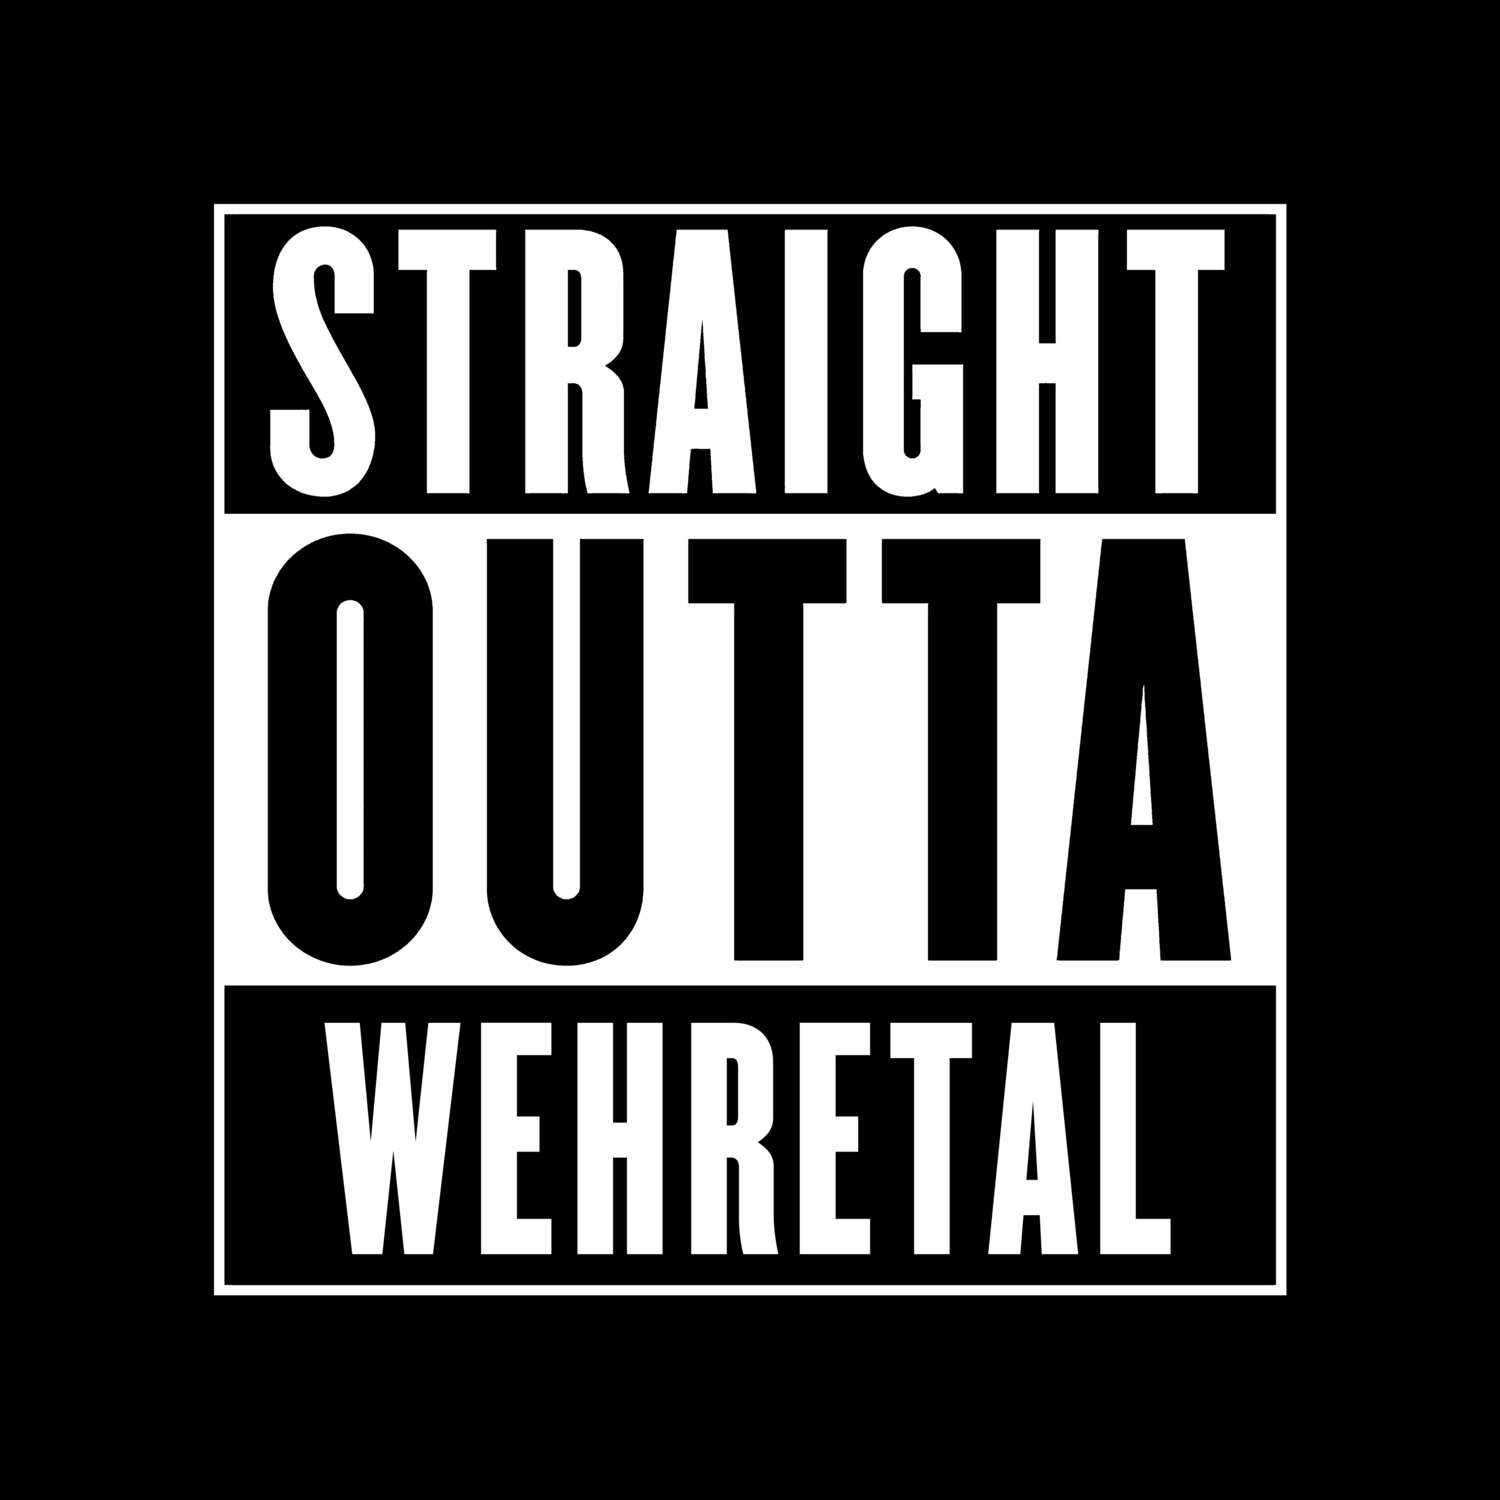 Wehretal T-Shirt »Straight Outta«